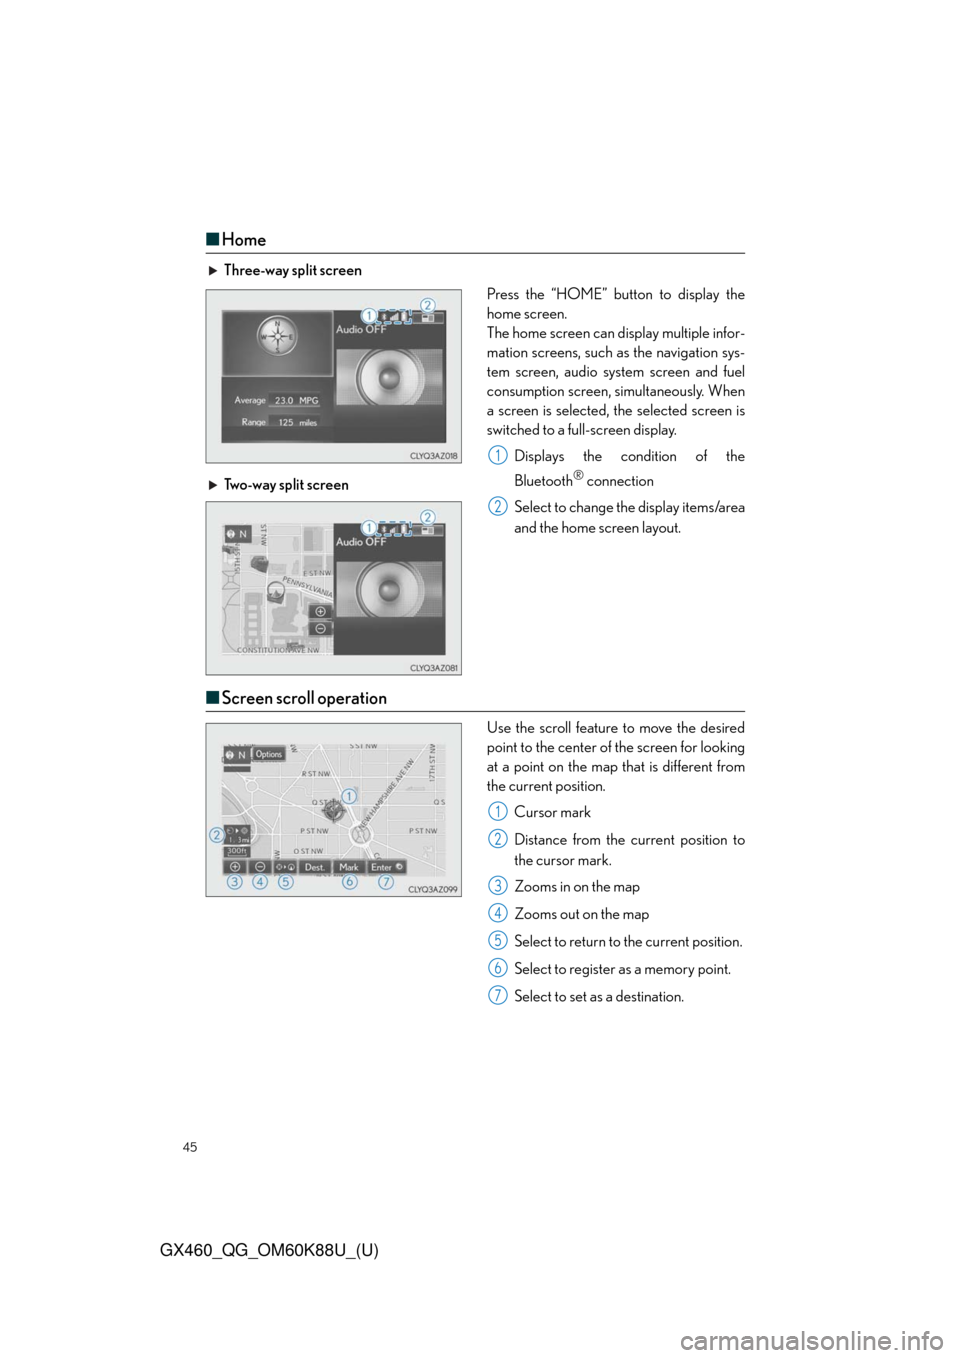 Lexus GX460 2014  REAR SEAT ENTERTAINMENT SYSTEM OPERATION / LEXUS 2014 GX460 QUICK GUIDE OWNERS MANUAL (OM60K88U) 45
GX460_QG_OM60K88U_(U)
■Home
Three-way split screen
Press the “HOME” button to display the
home screen.
The home screen can display multiple infor-
mation screens, such as the navigation sys-
